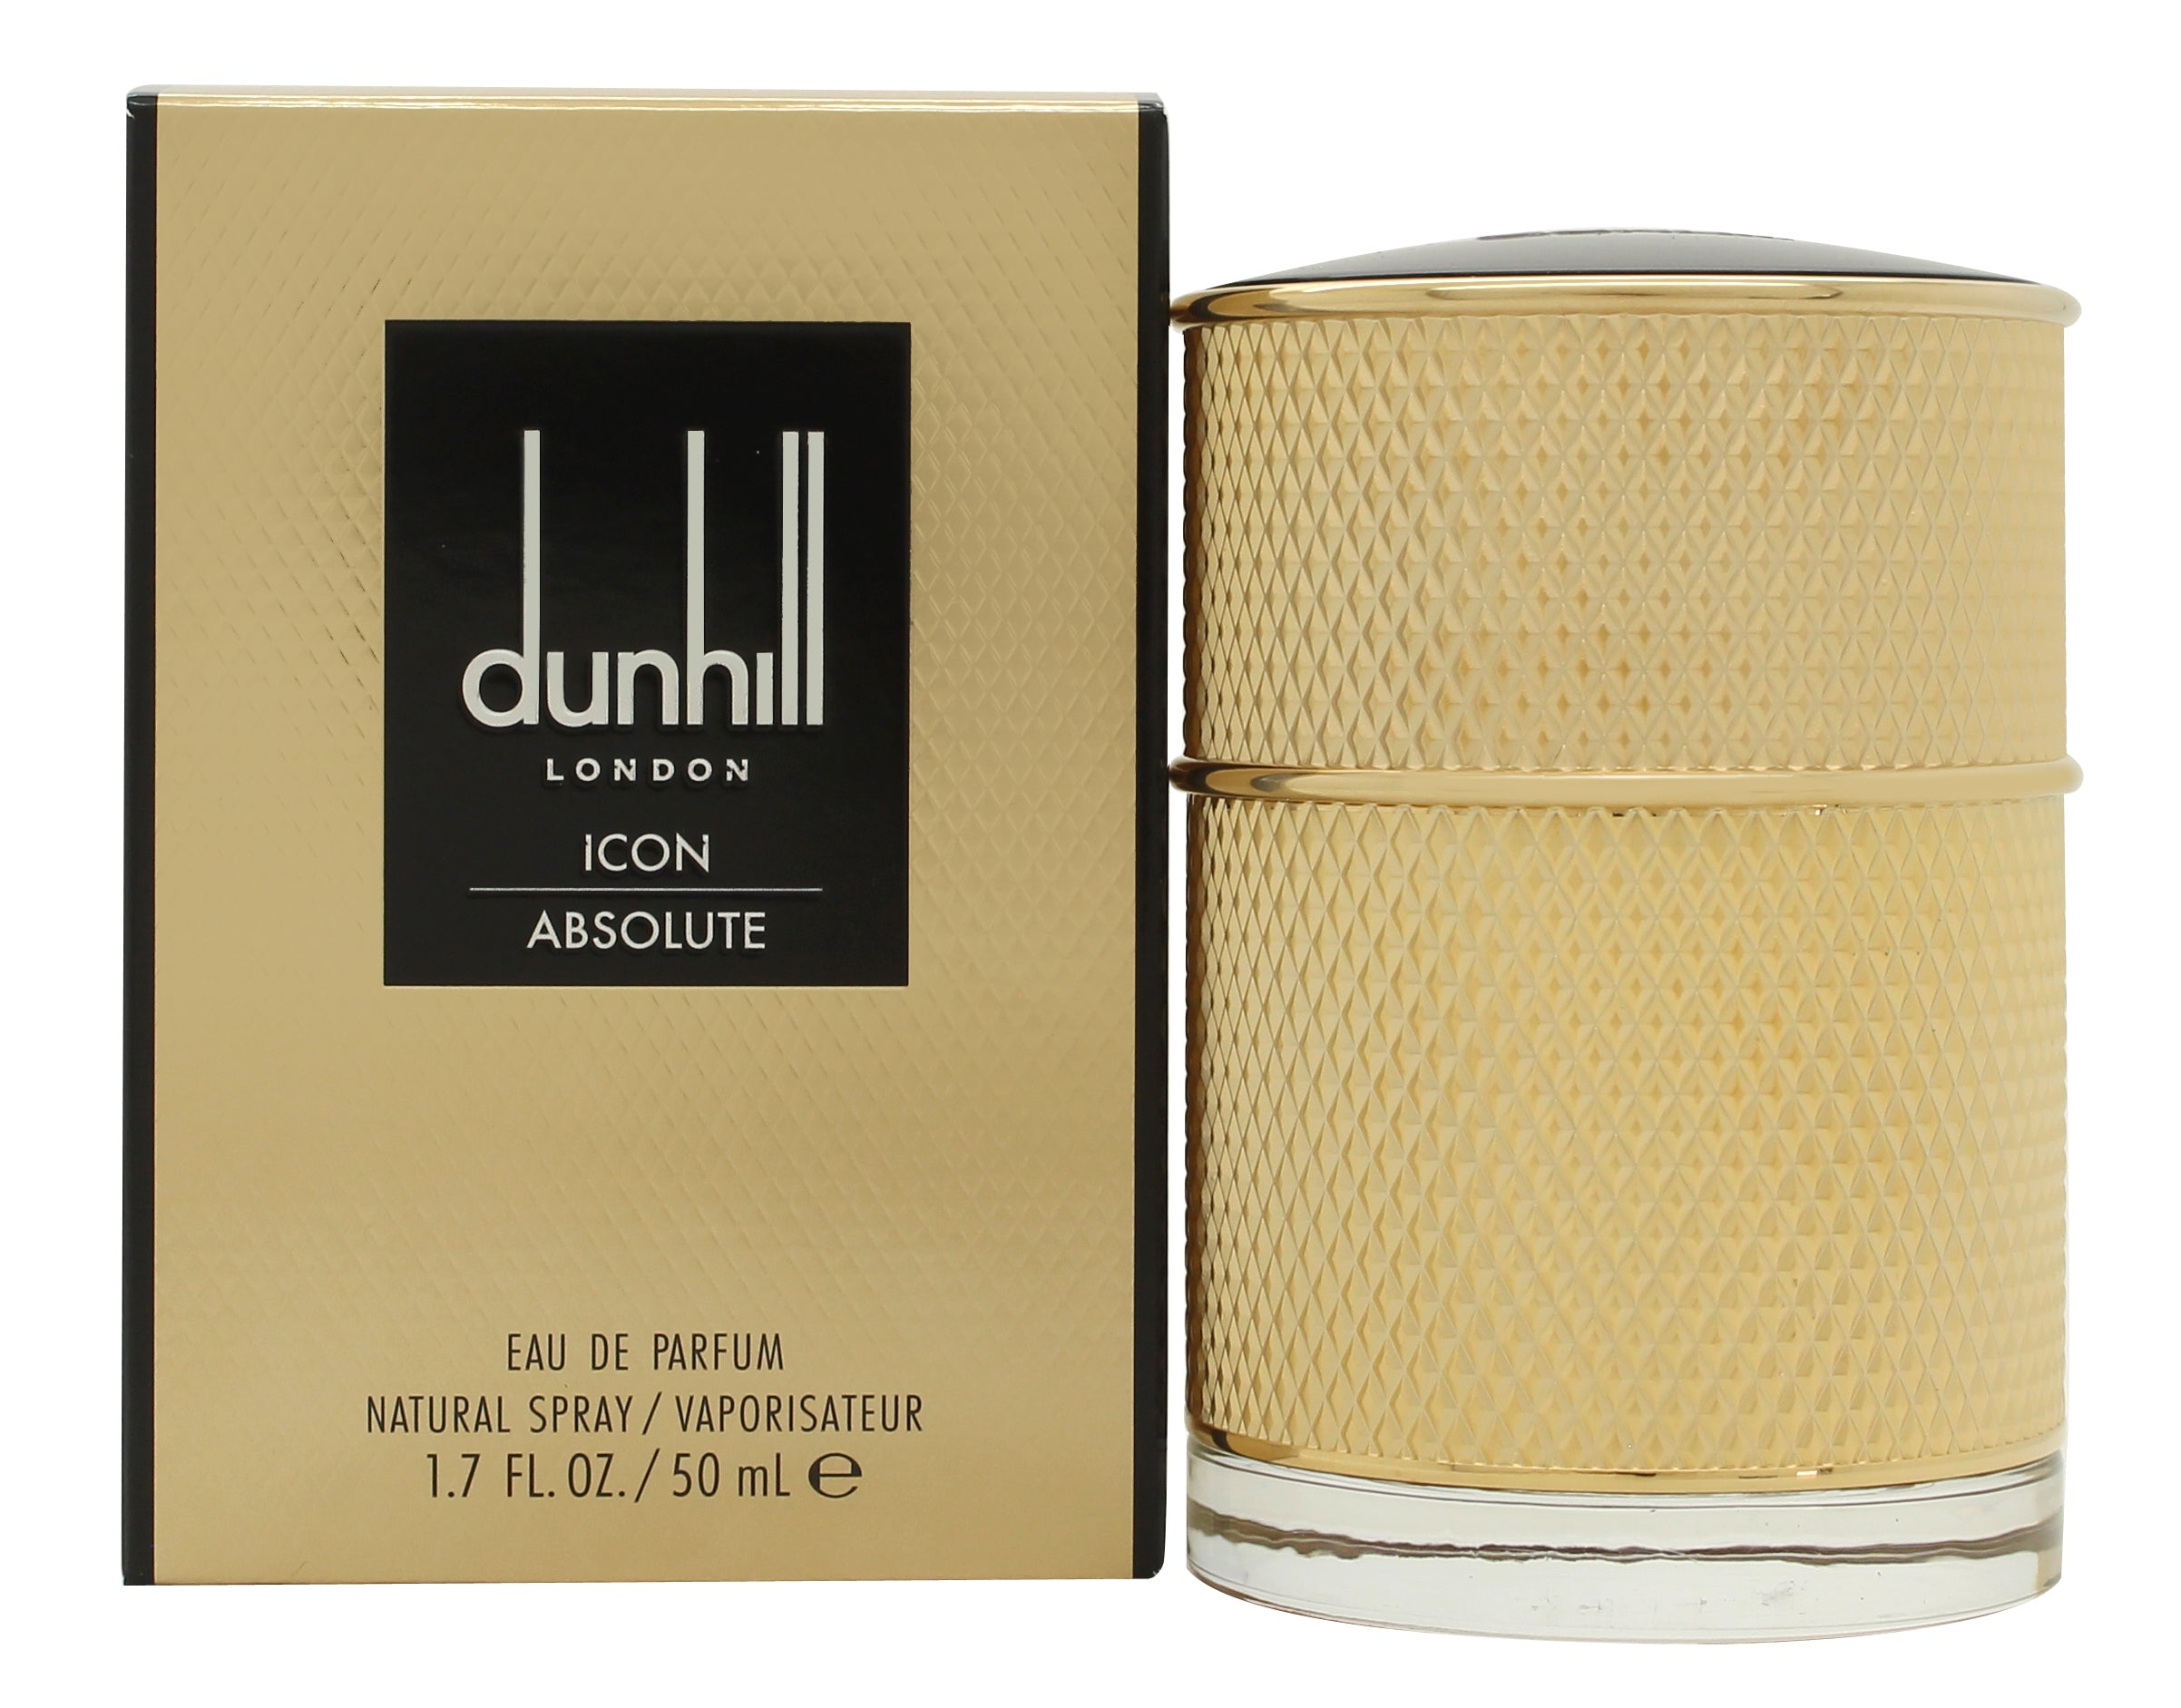 View Dunhill Icon Absolute Eau de Parfum 50ml Spray information